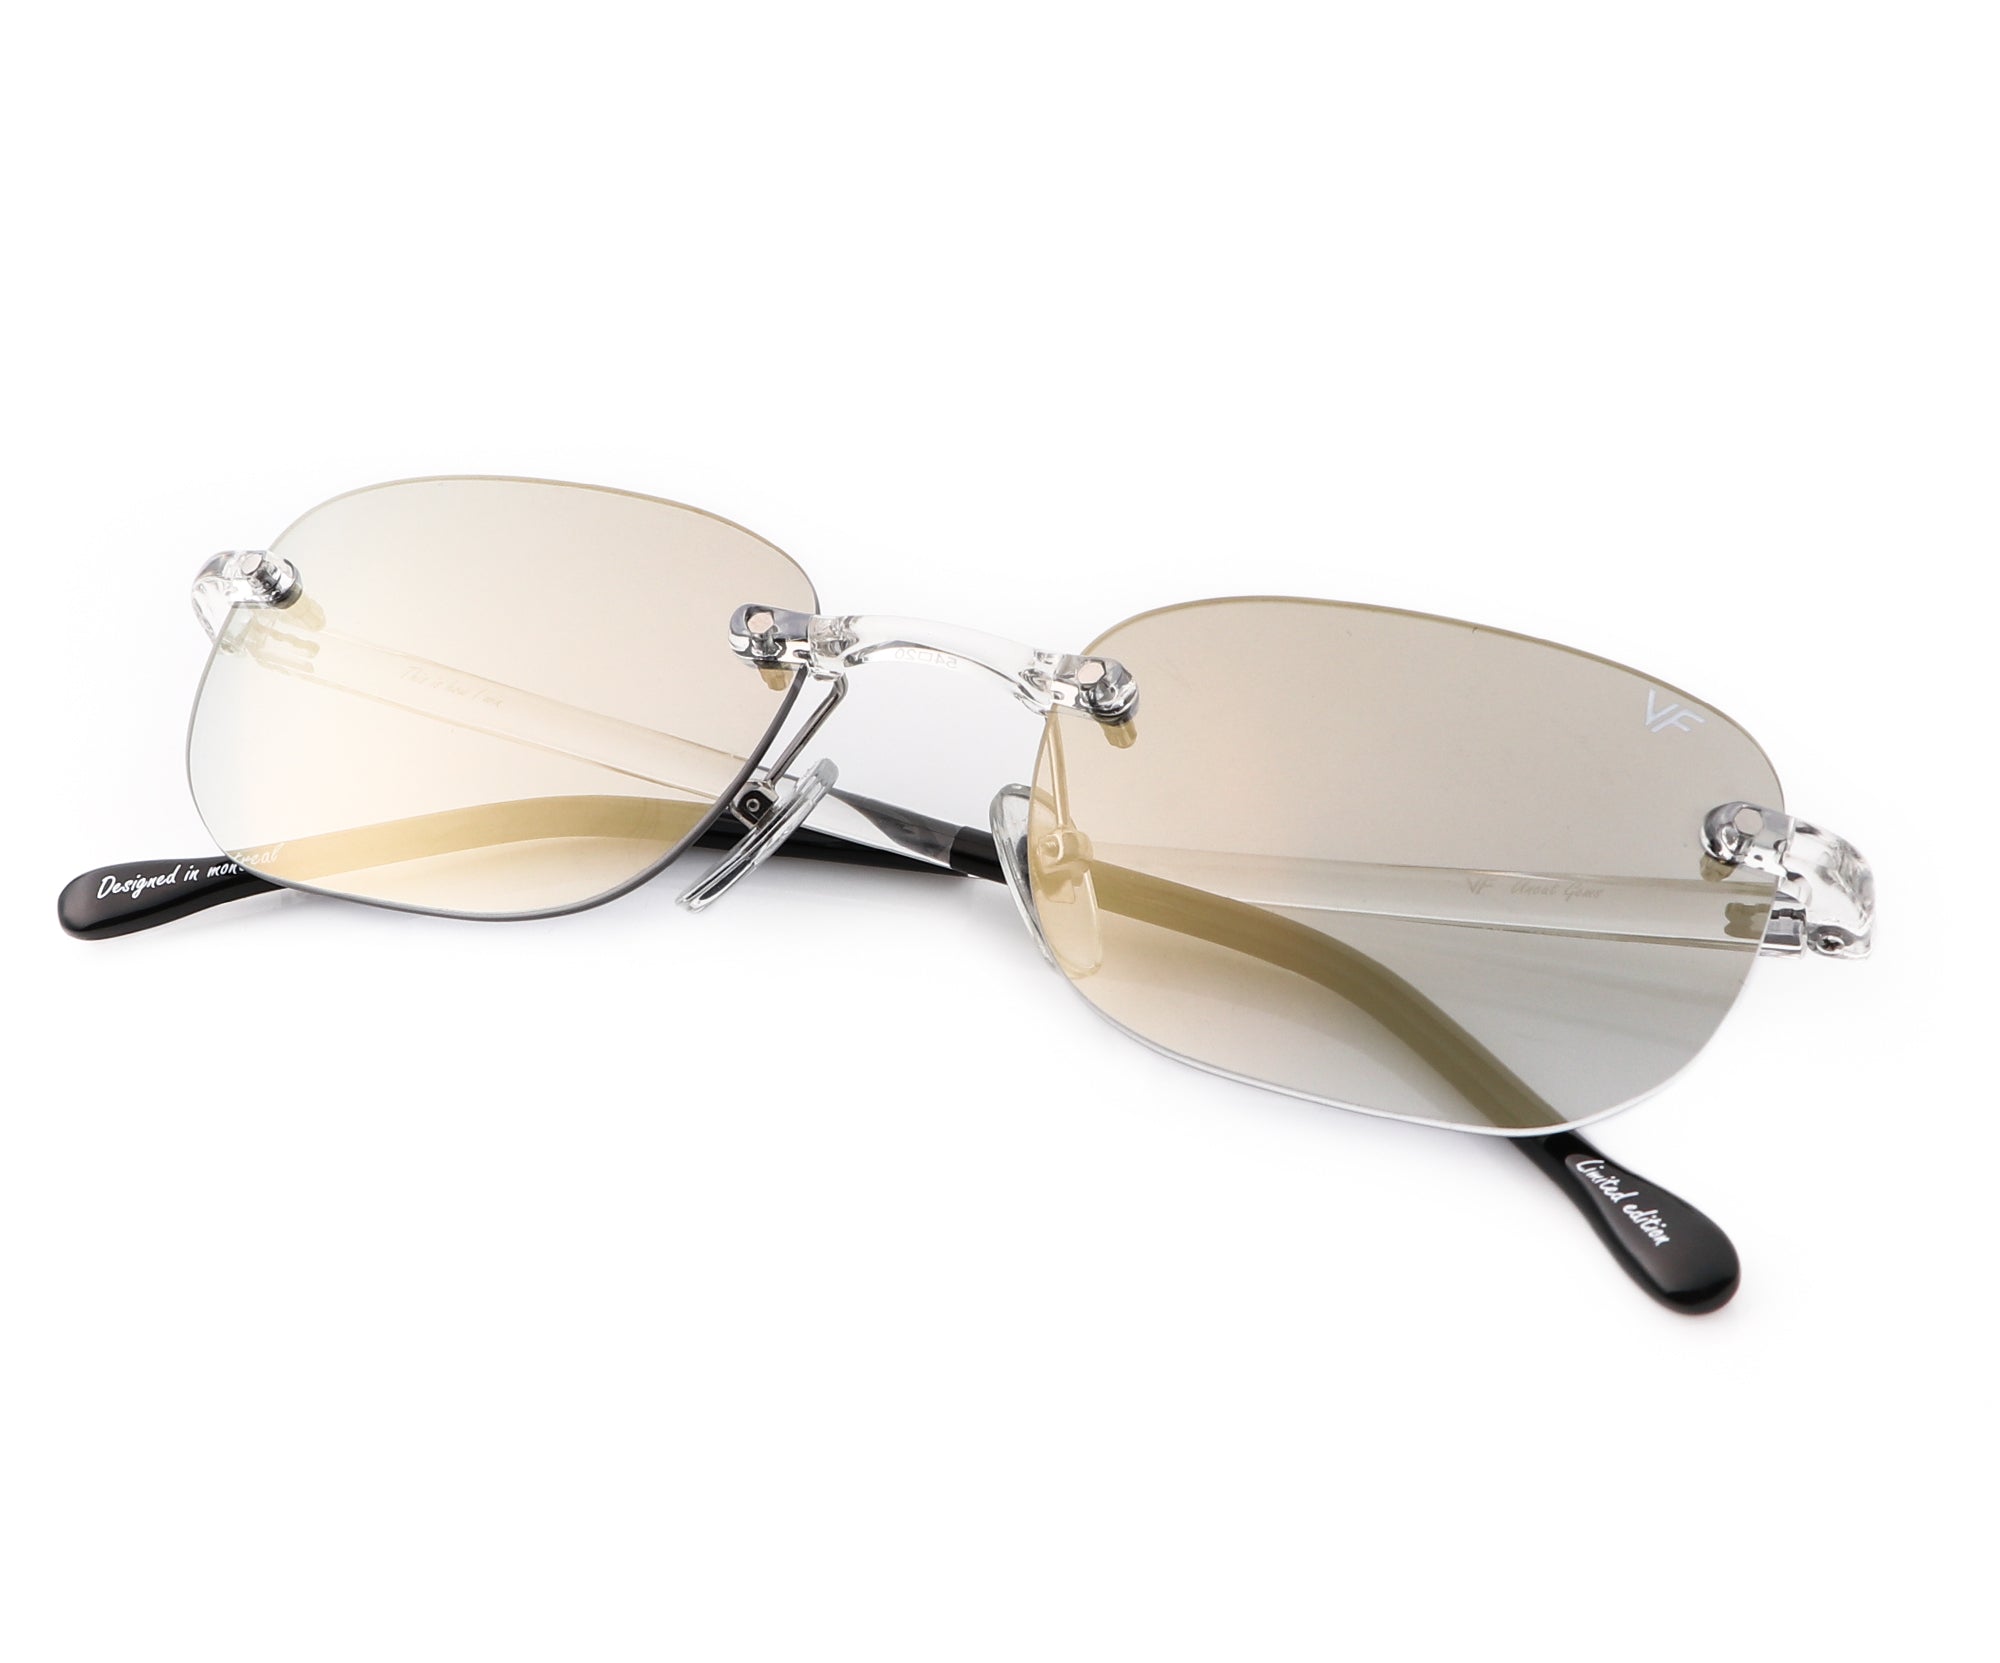  COASION Wrap Around Y2K Rimless Sunglasses for Women